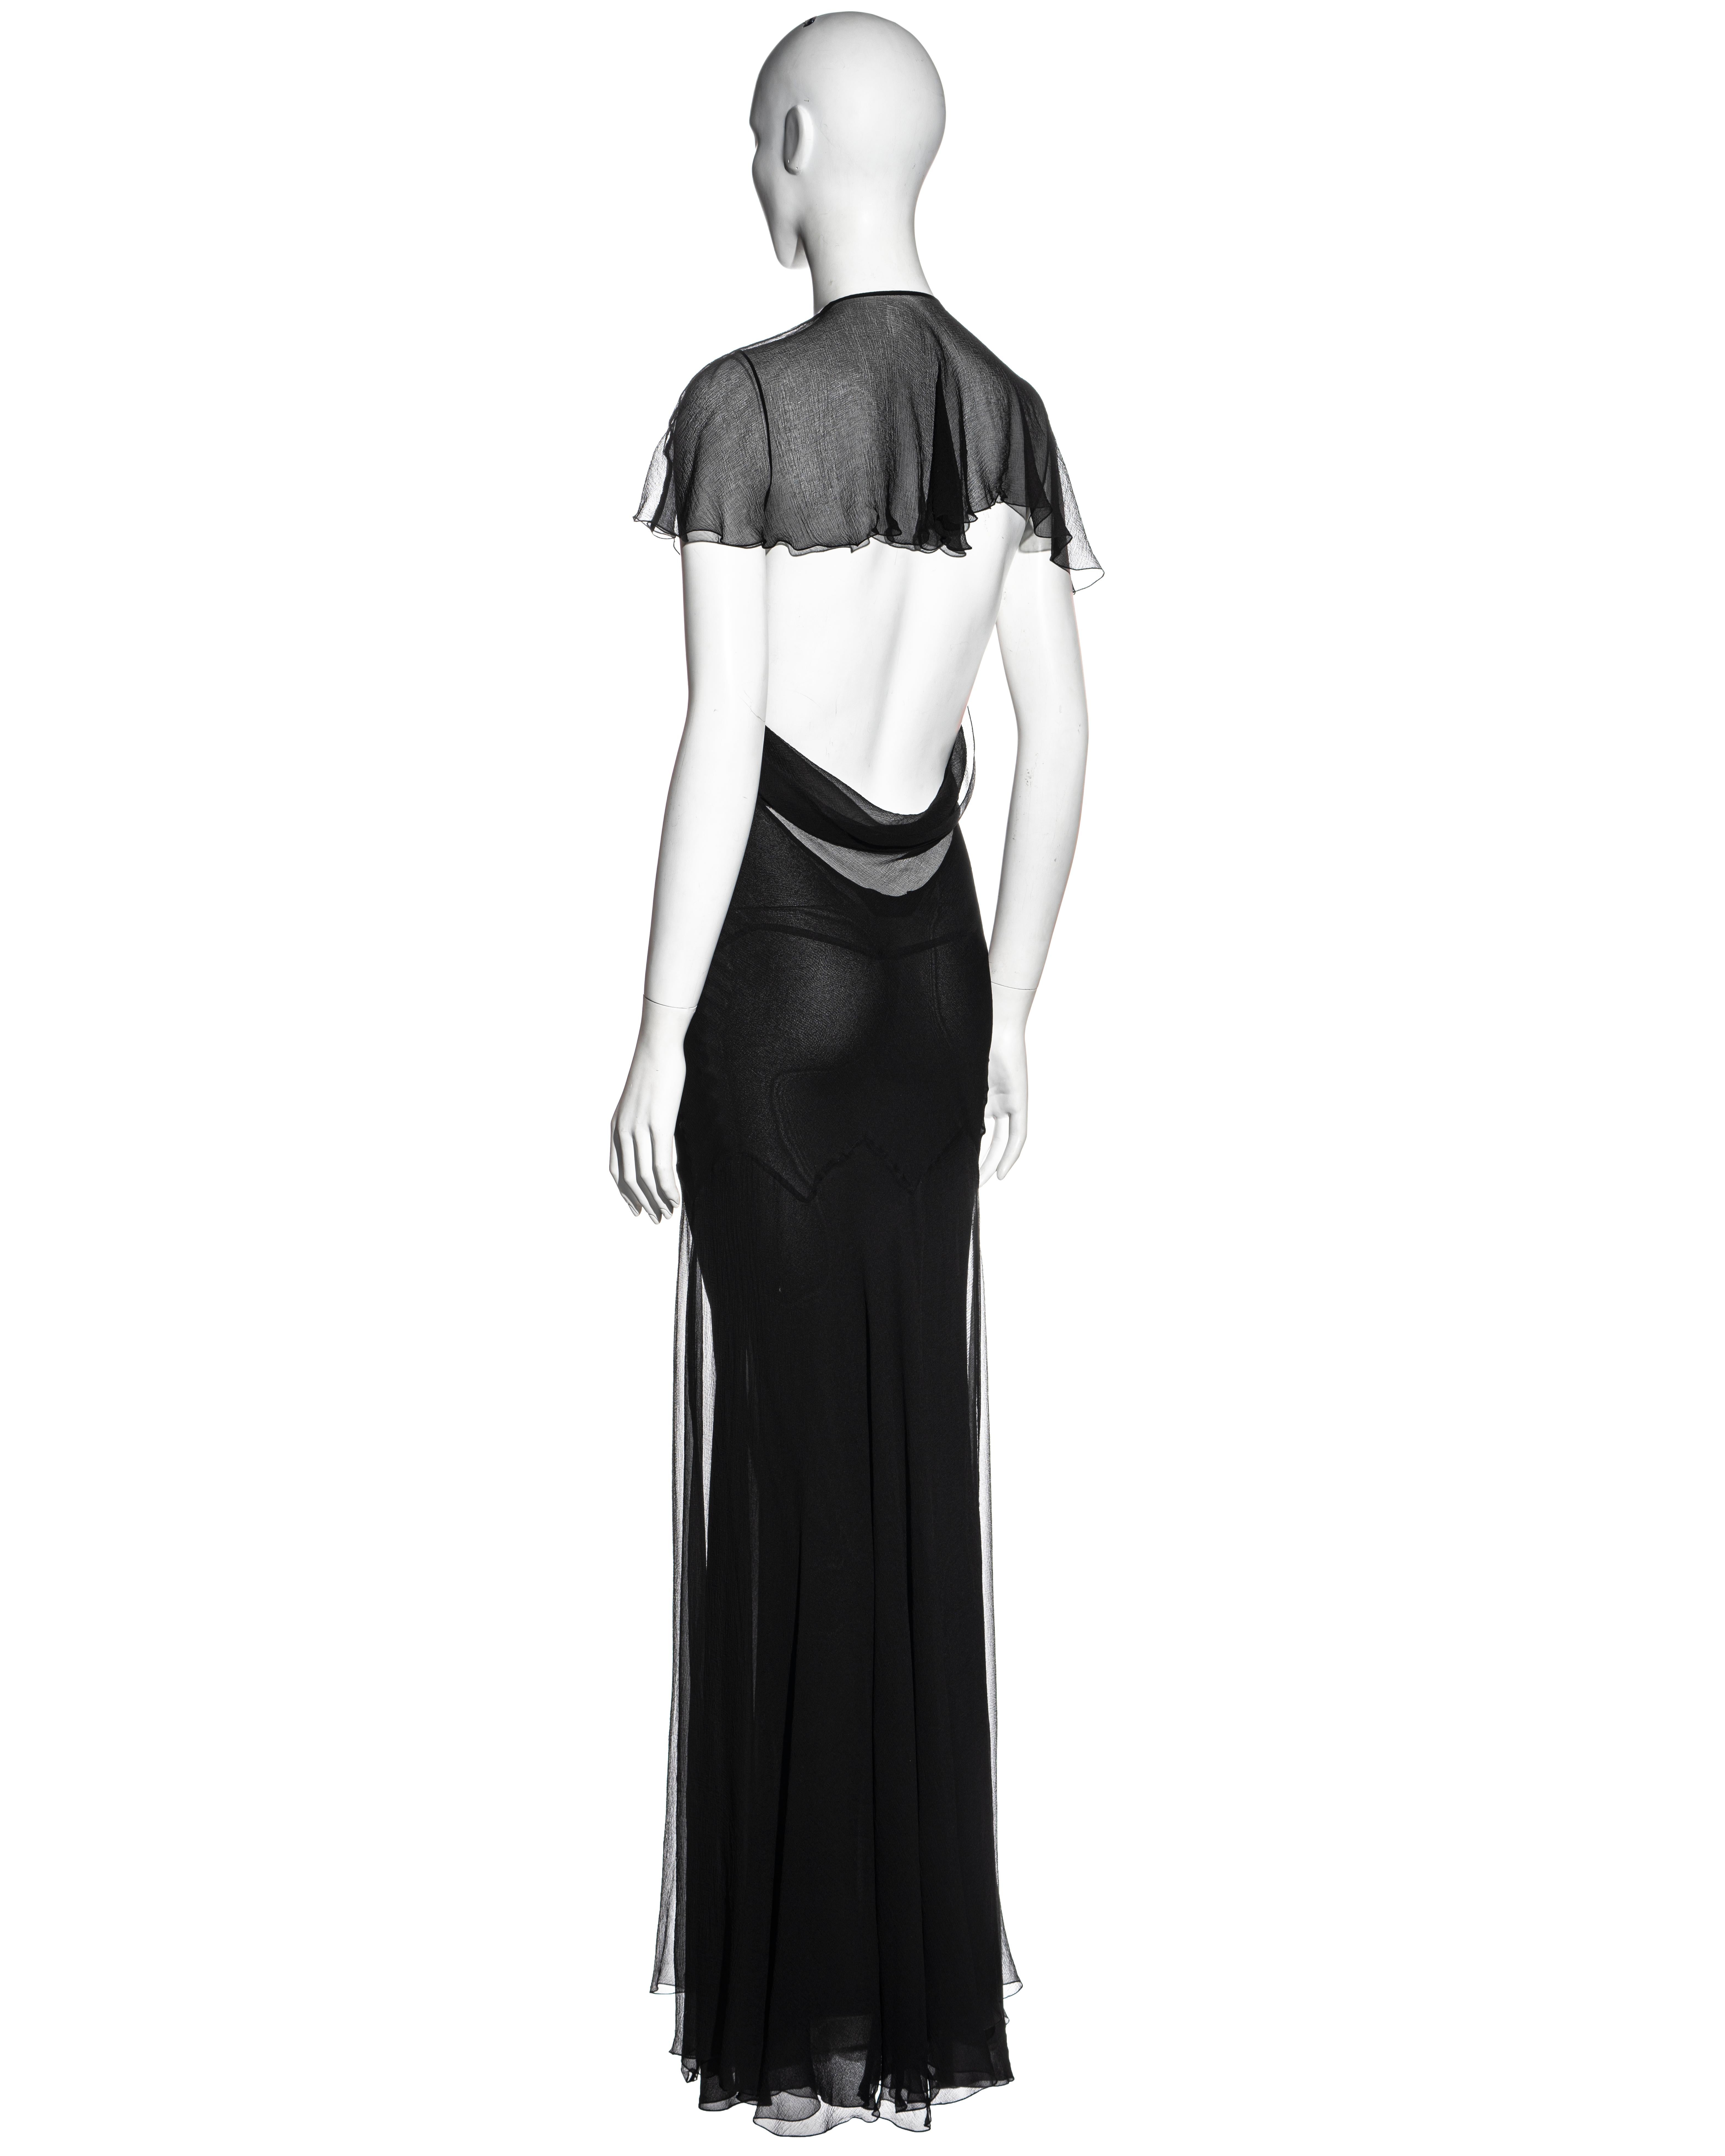 Black John Galliano black silk chiffon double layered bias cut dress, c. 1995 - 1999